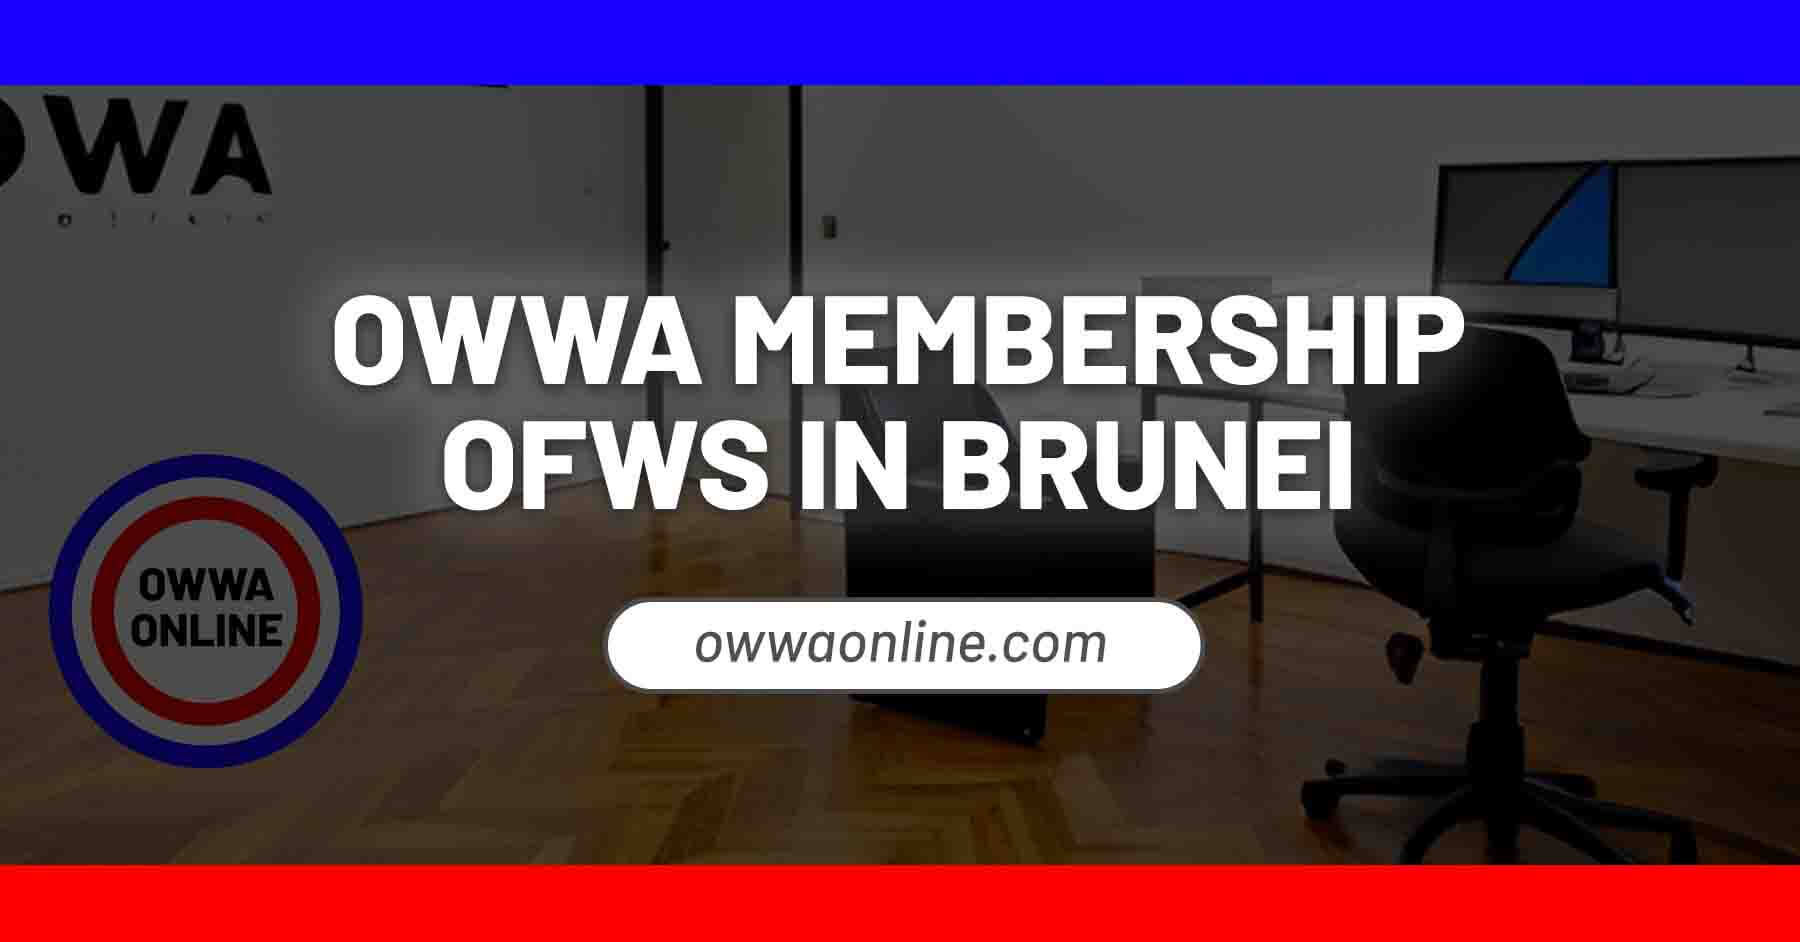 owwa appointment brunei renewal application